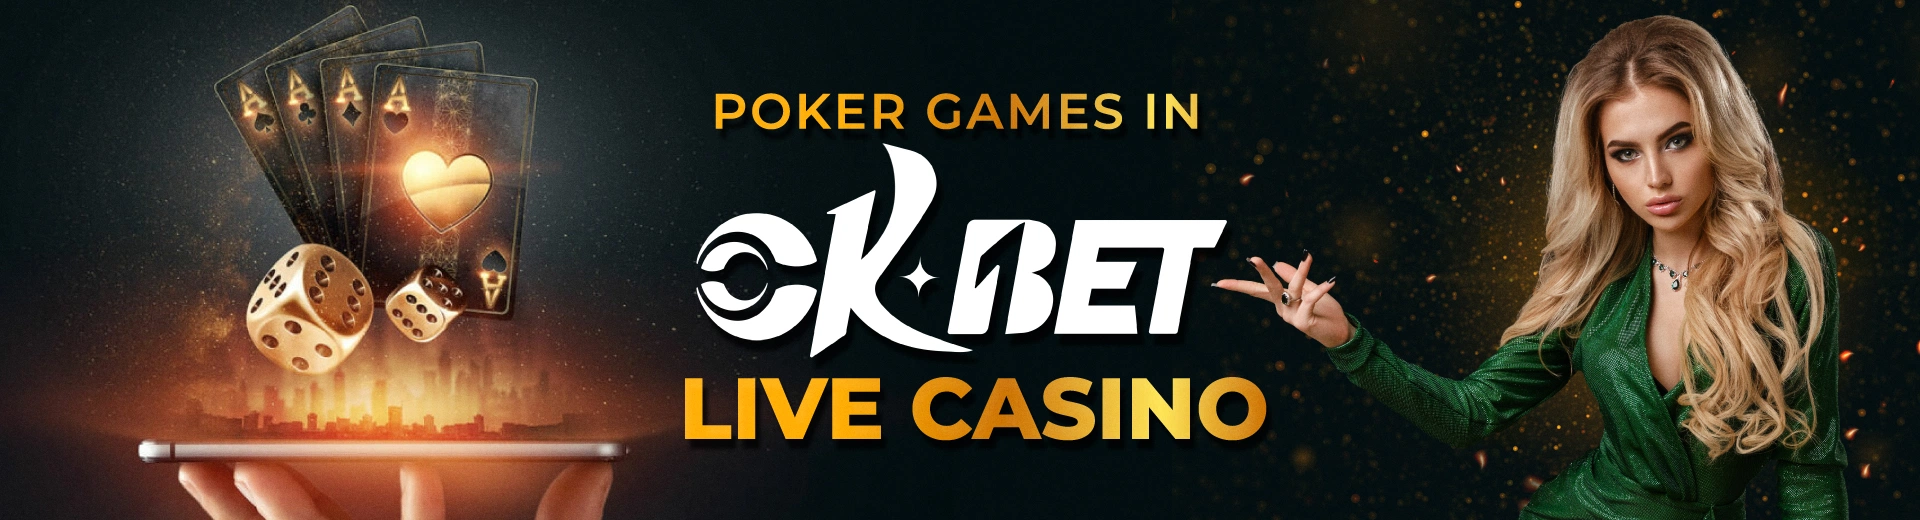 Different Types of Poker Games in OKBET Live Casino - OKBET live casino